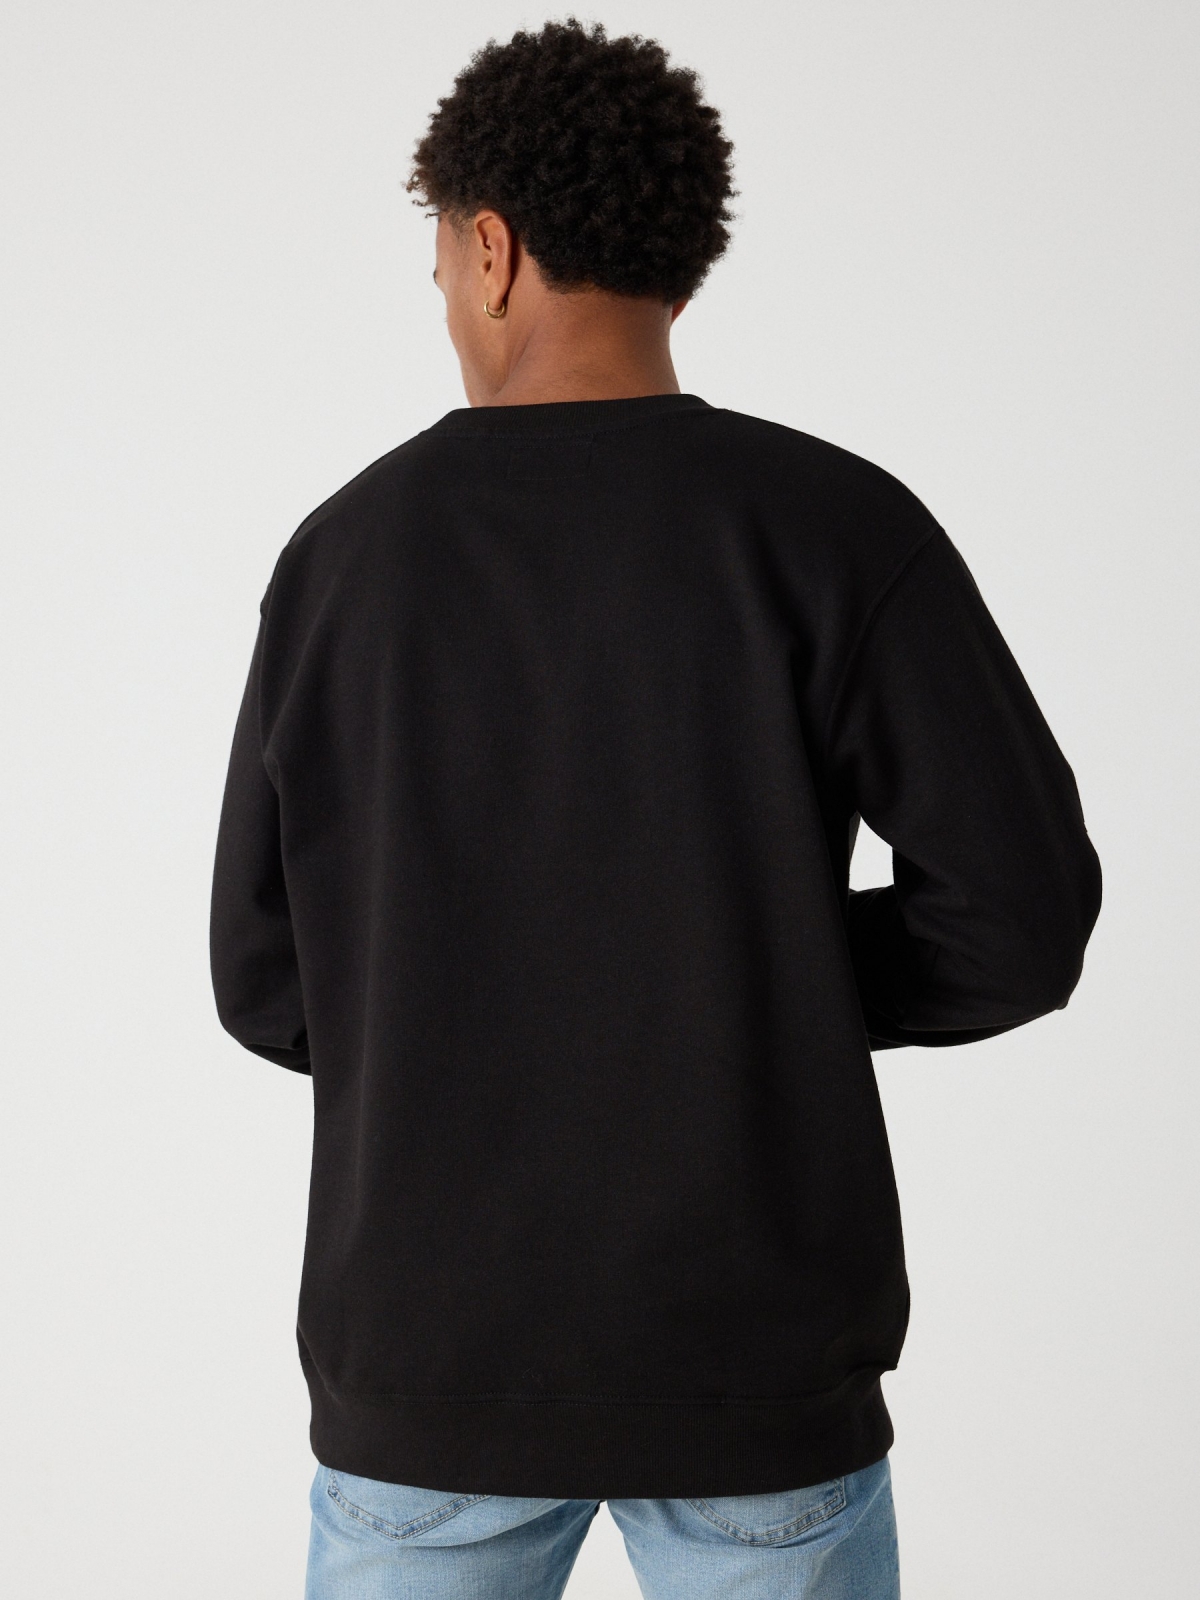 Sweatshirt de jogo impressa preto vista meia traseira